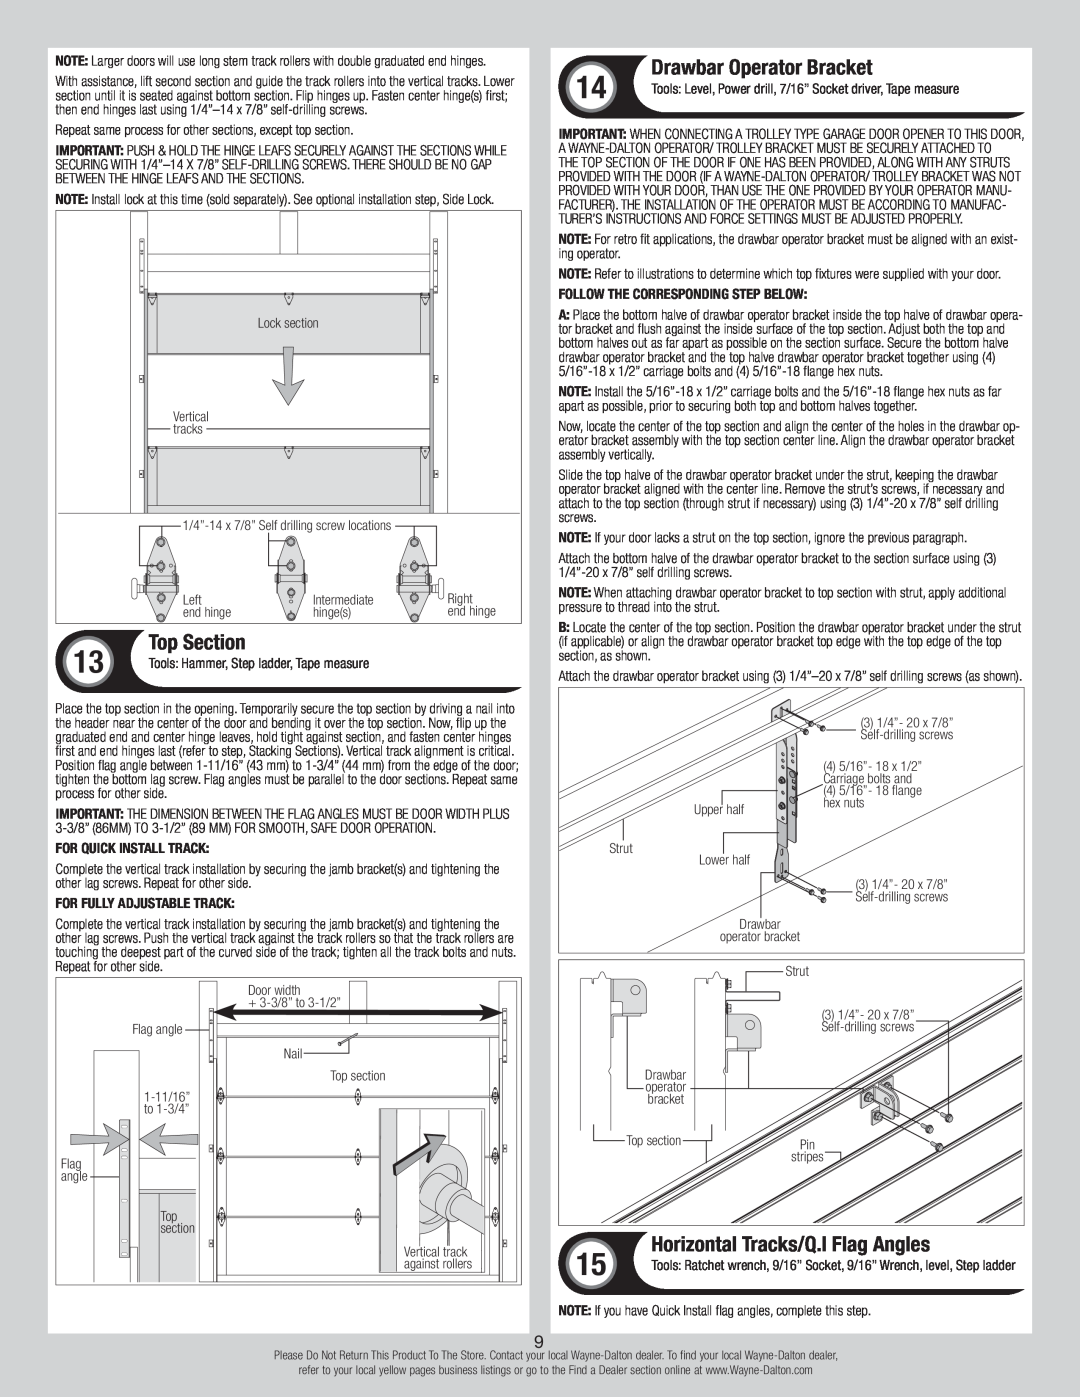 Wayne-Dalton 8700 installation instructions Drawbar Operator Bracket, Horizontal Tracks/Q.I Flag Angles, Top Section 